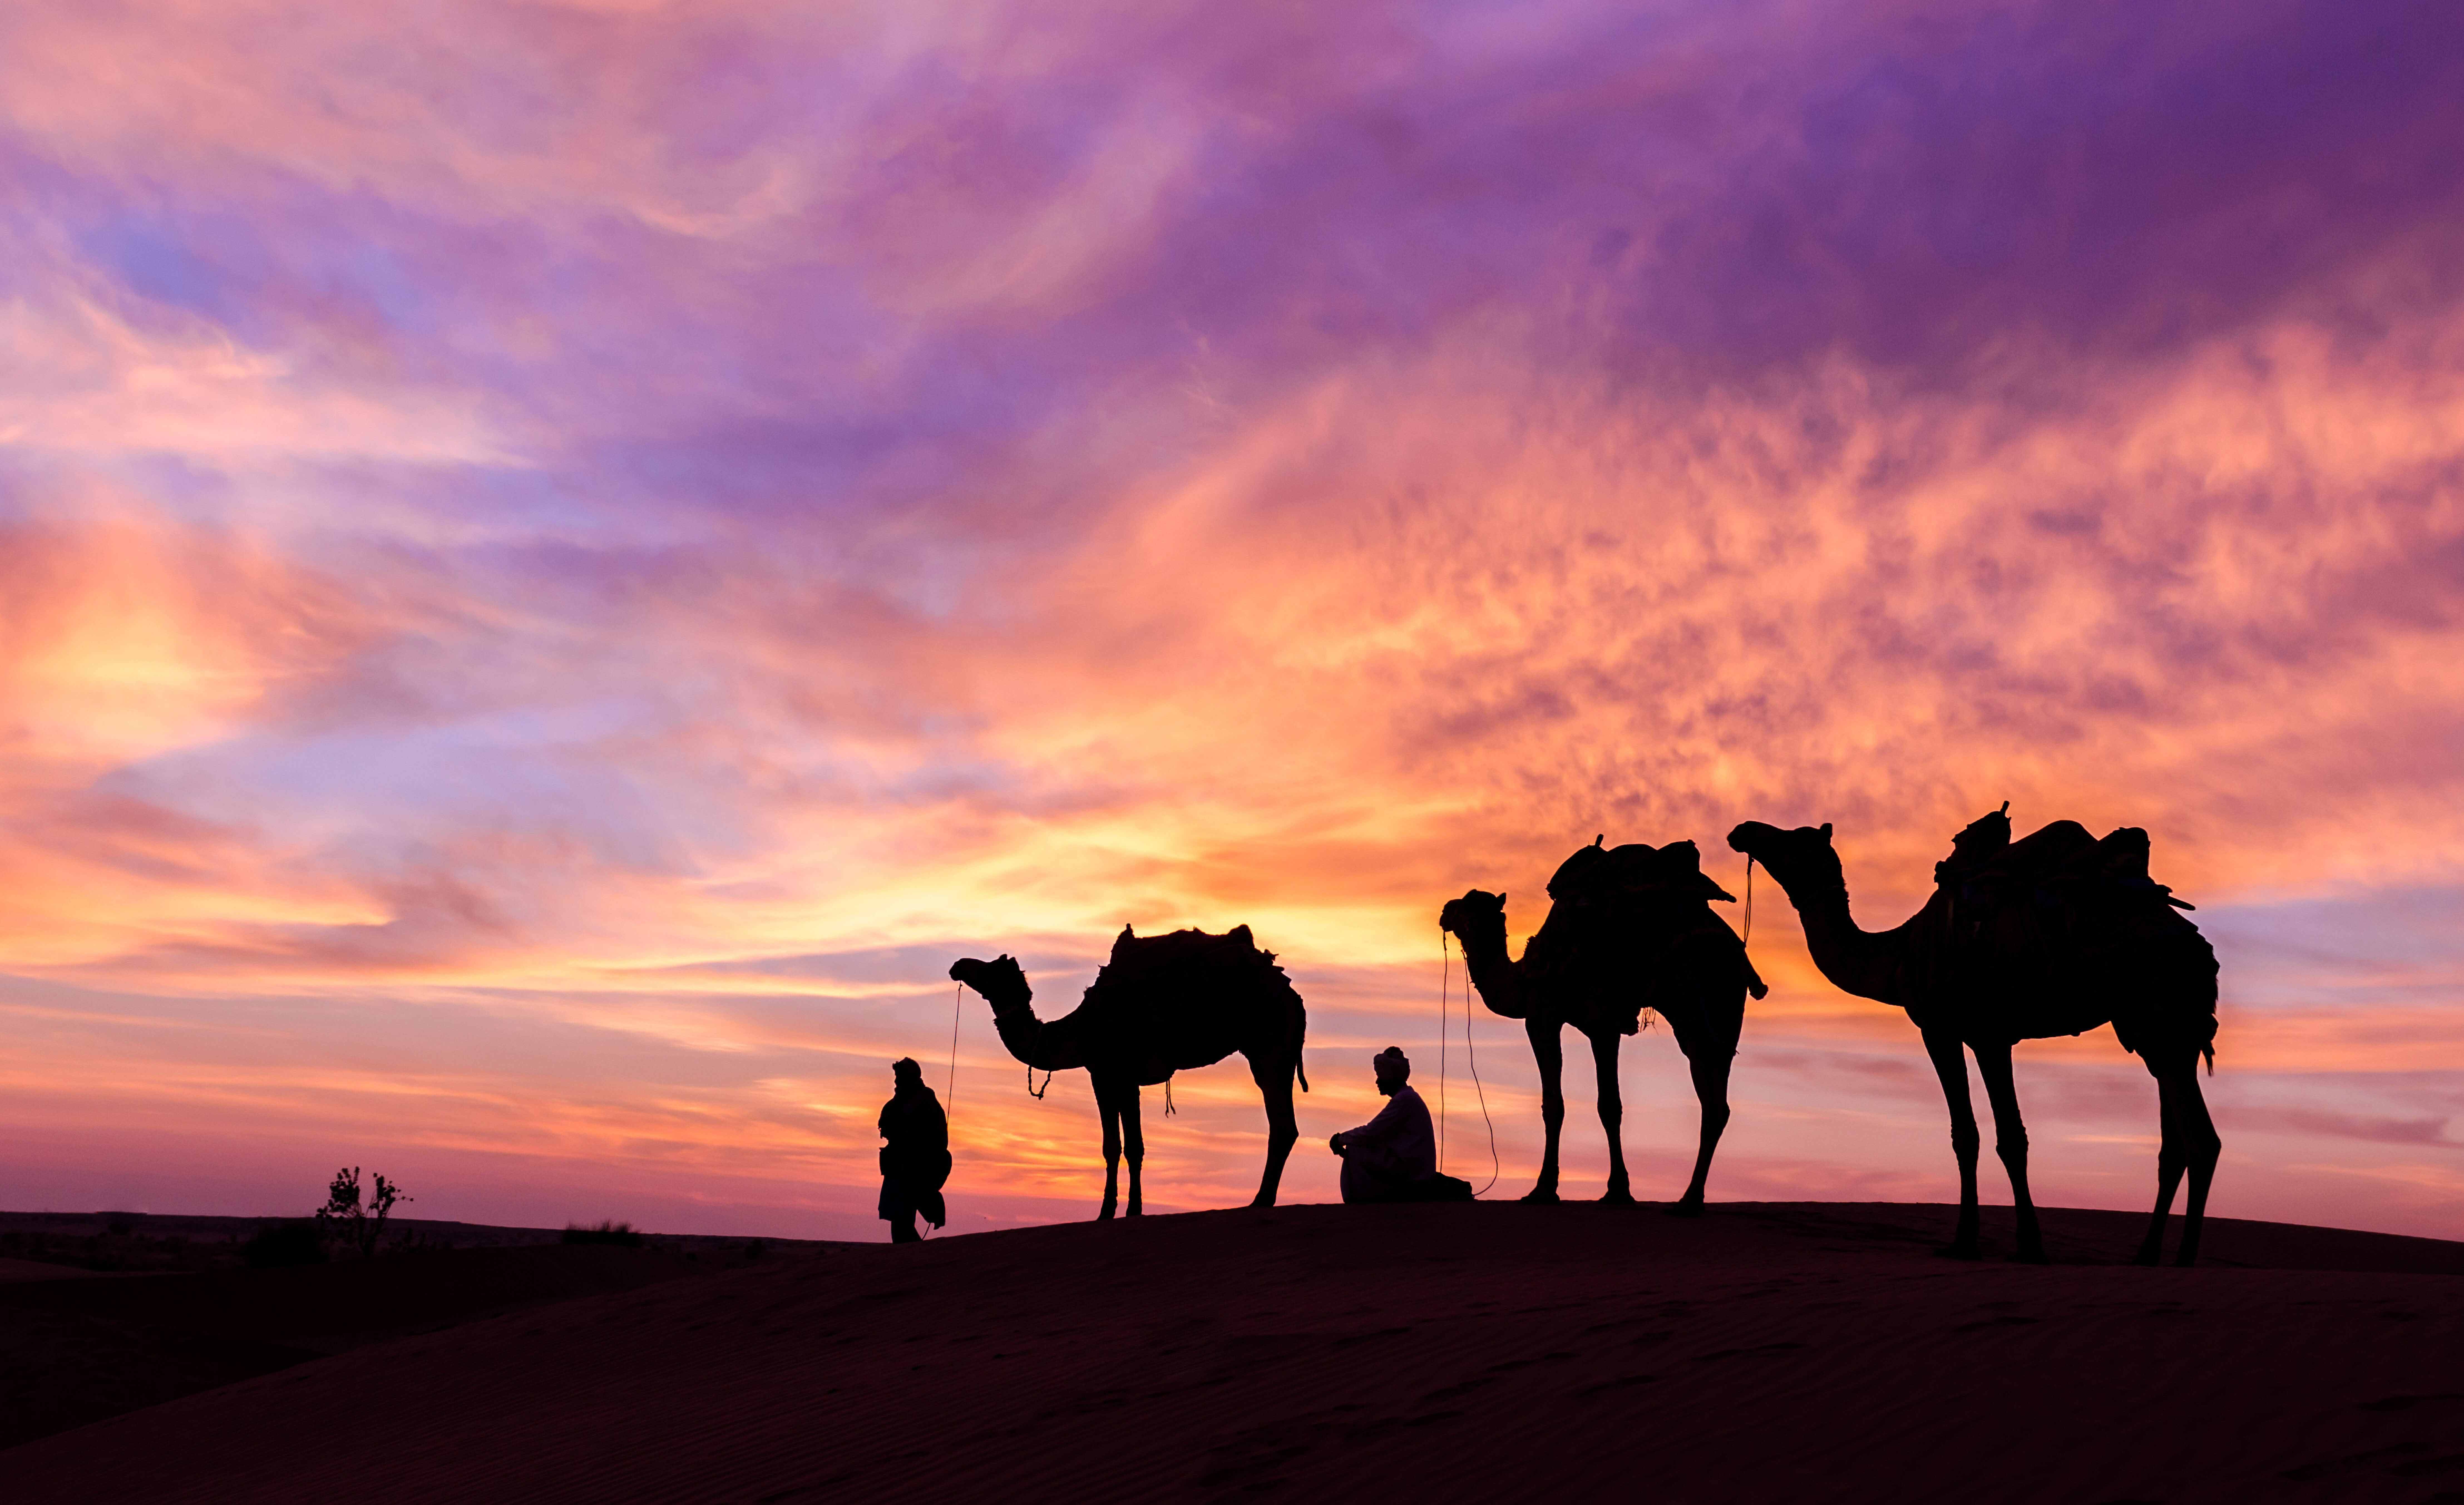 Караван цветов. Караван с верблюдами в пустыне. Караван Аравийской пустыне ОАЭ. Арабы с караваном в пустыне. Караван верблюдов в пустыне.